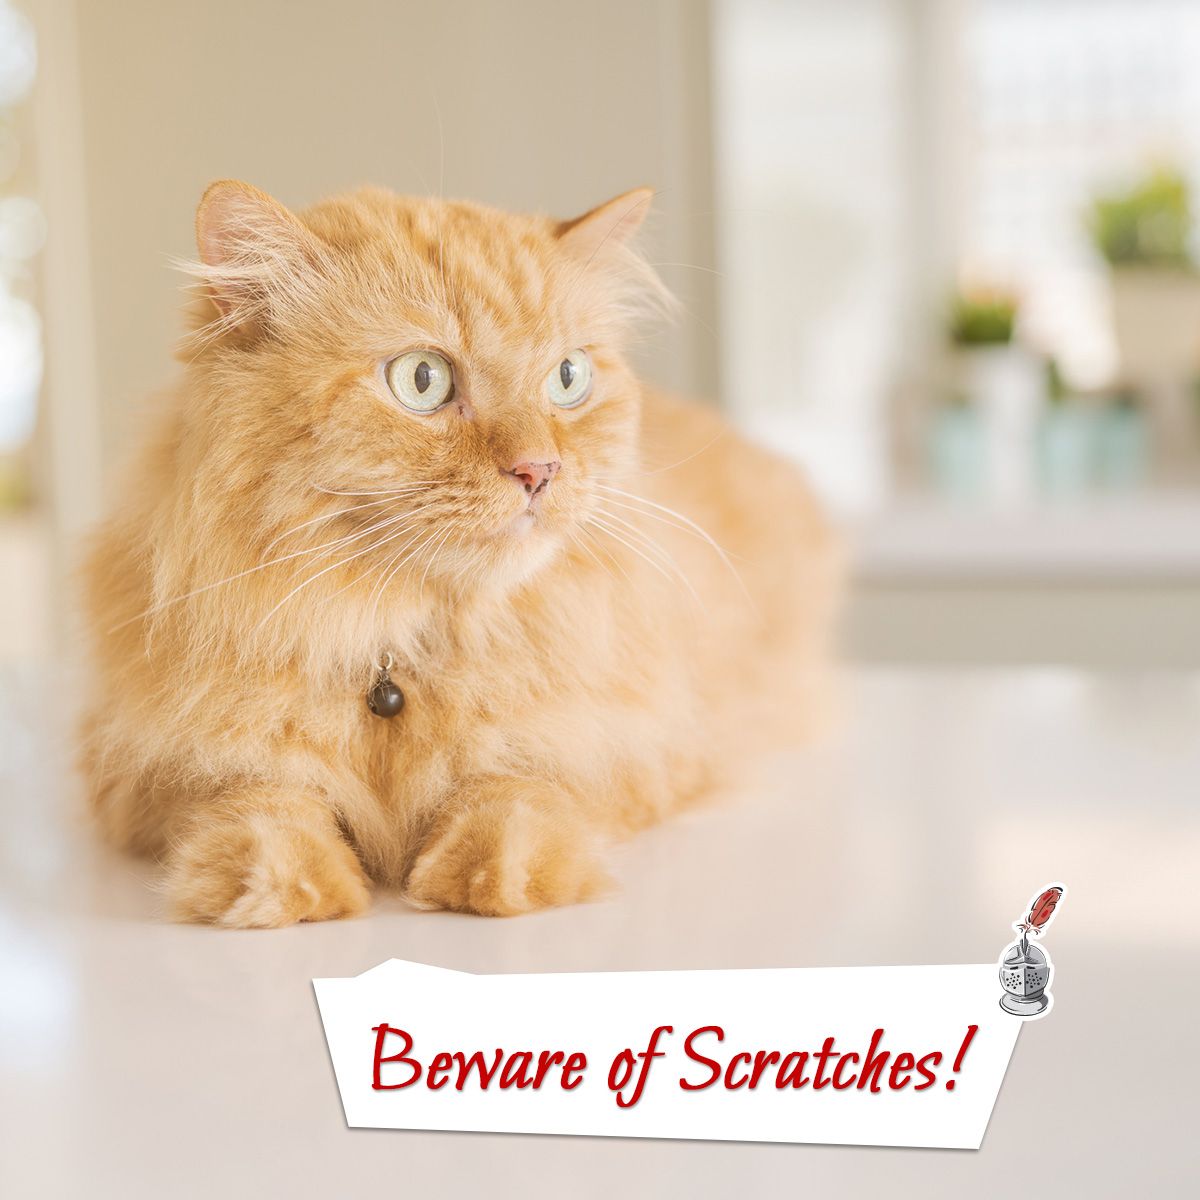 Beware of Scratches!